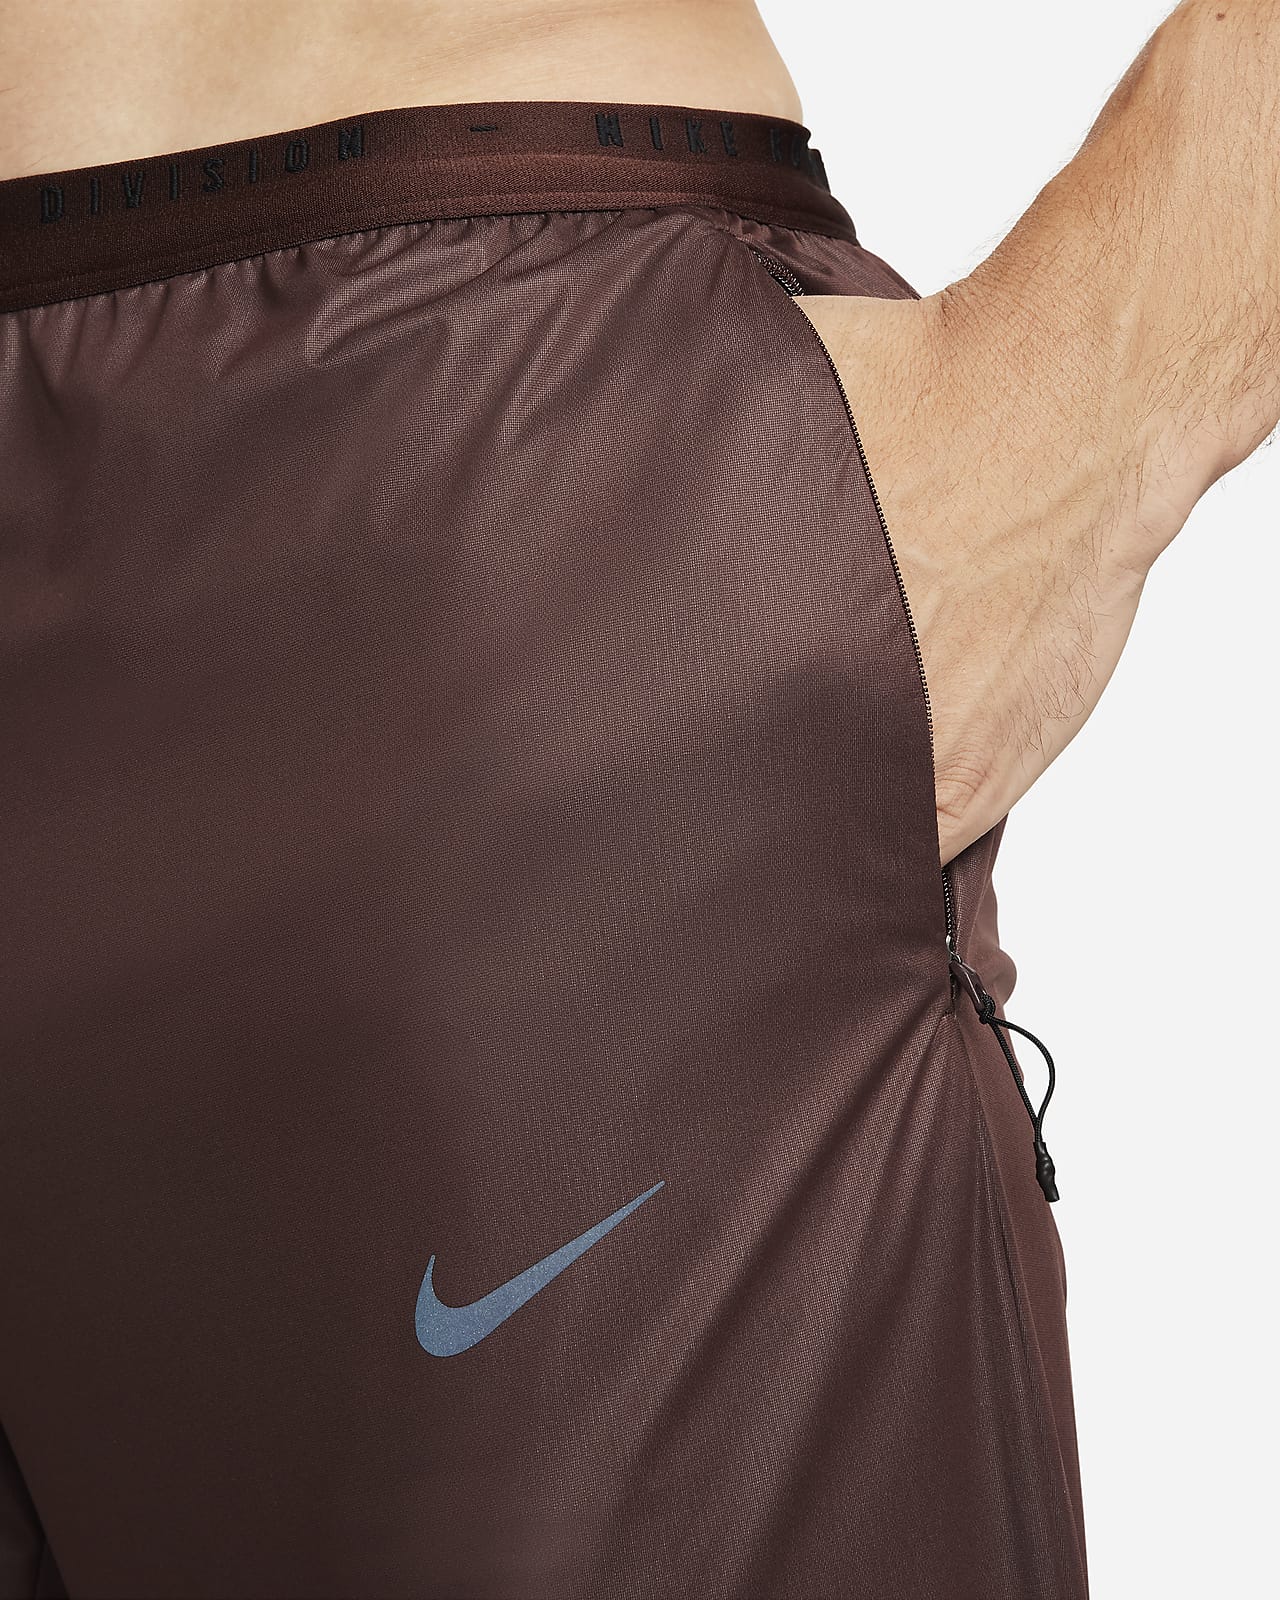 Nike Therma-FIT Run Division Elite Men's Running Trousers